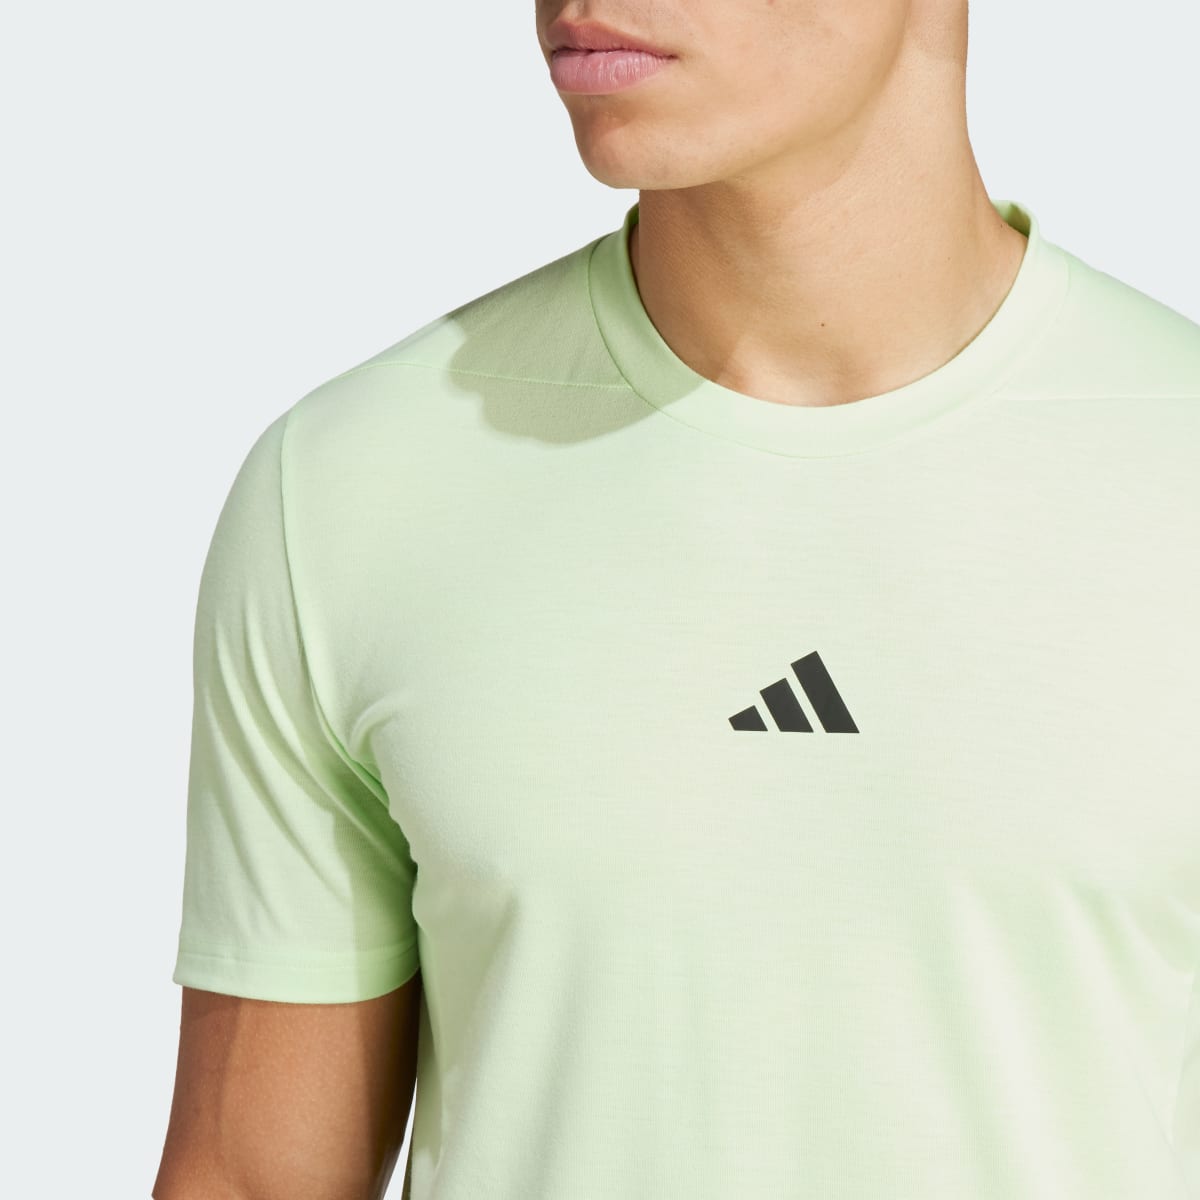 Adidas T-shirt Designed for Training Workout. 6